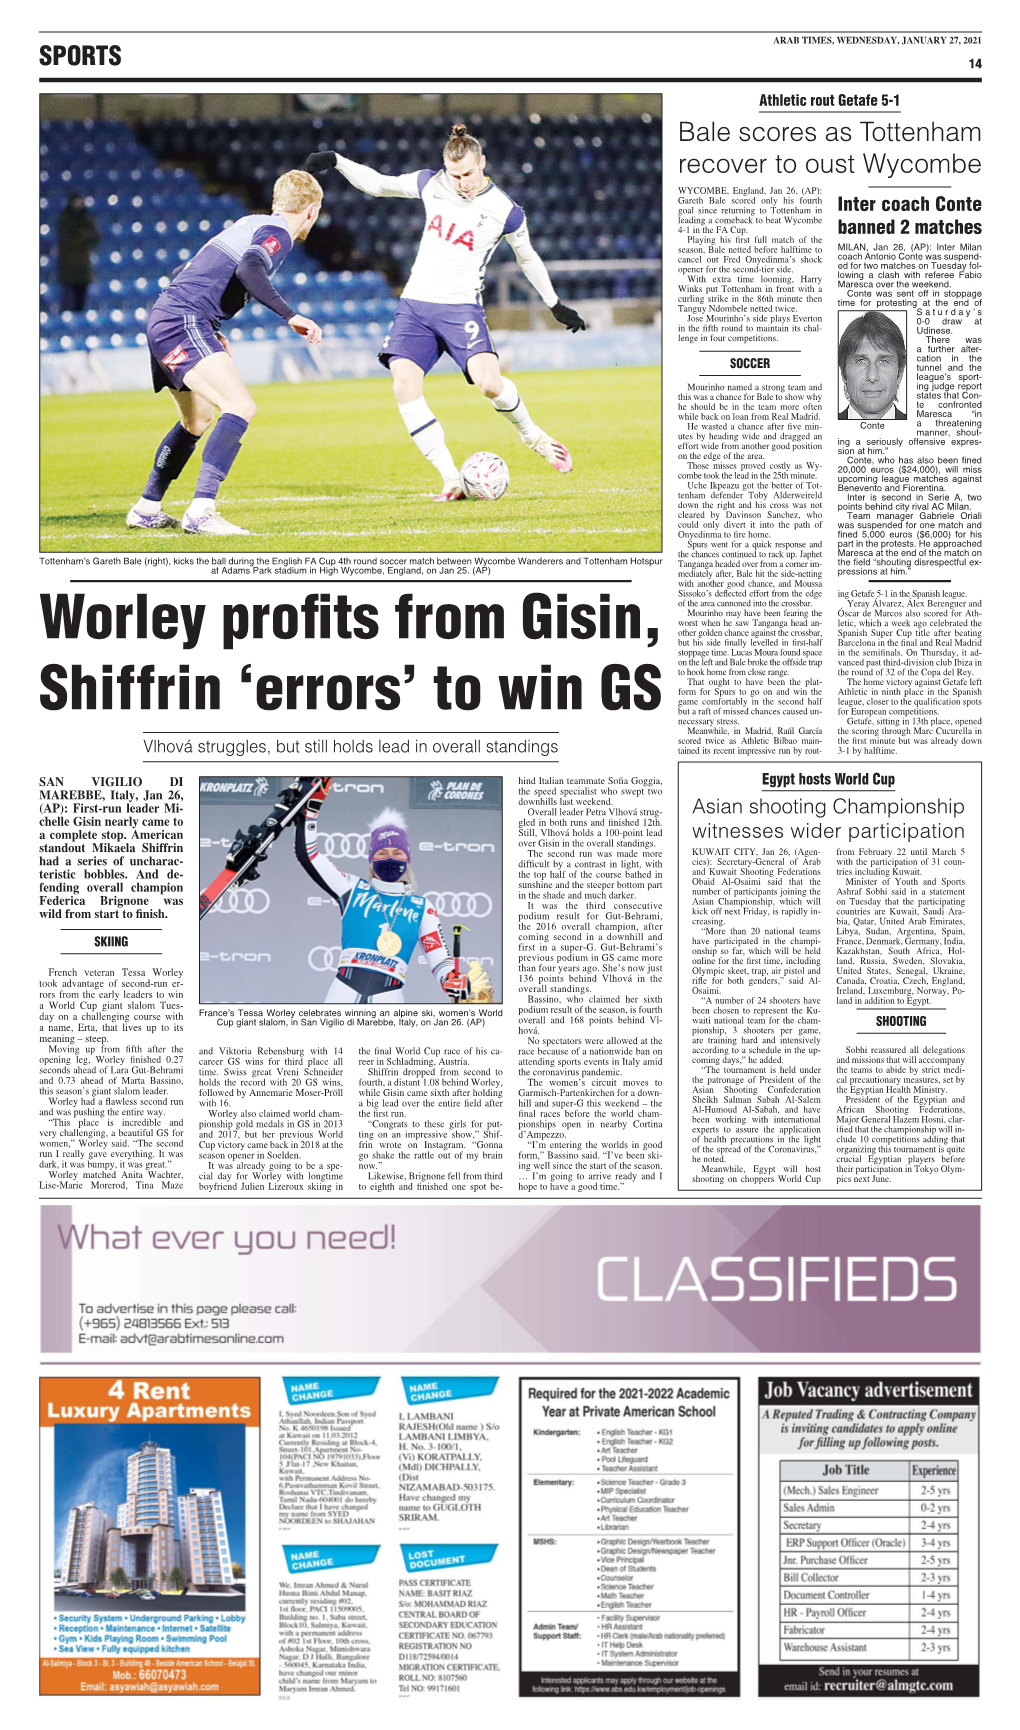 Worley Profits from Gisin, Shiffrin